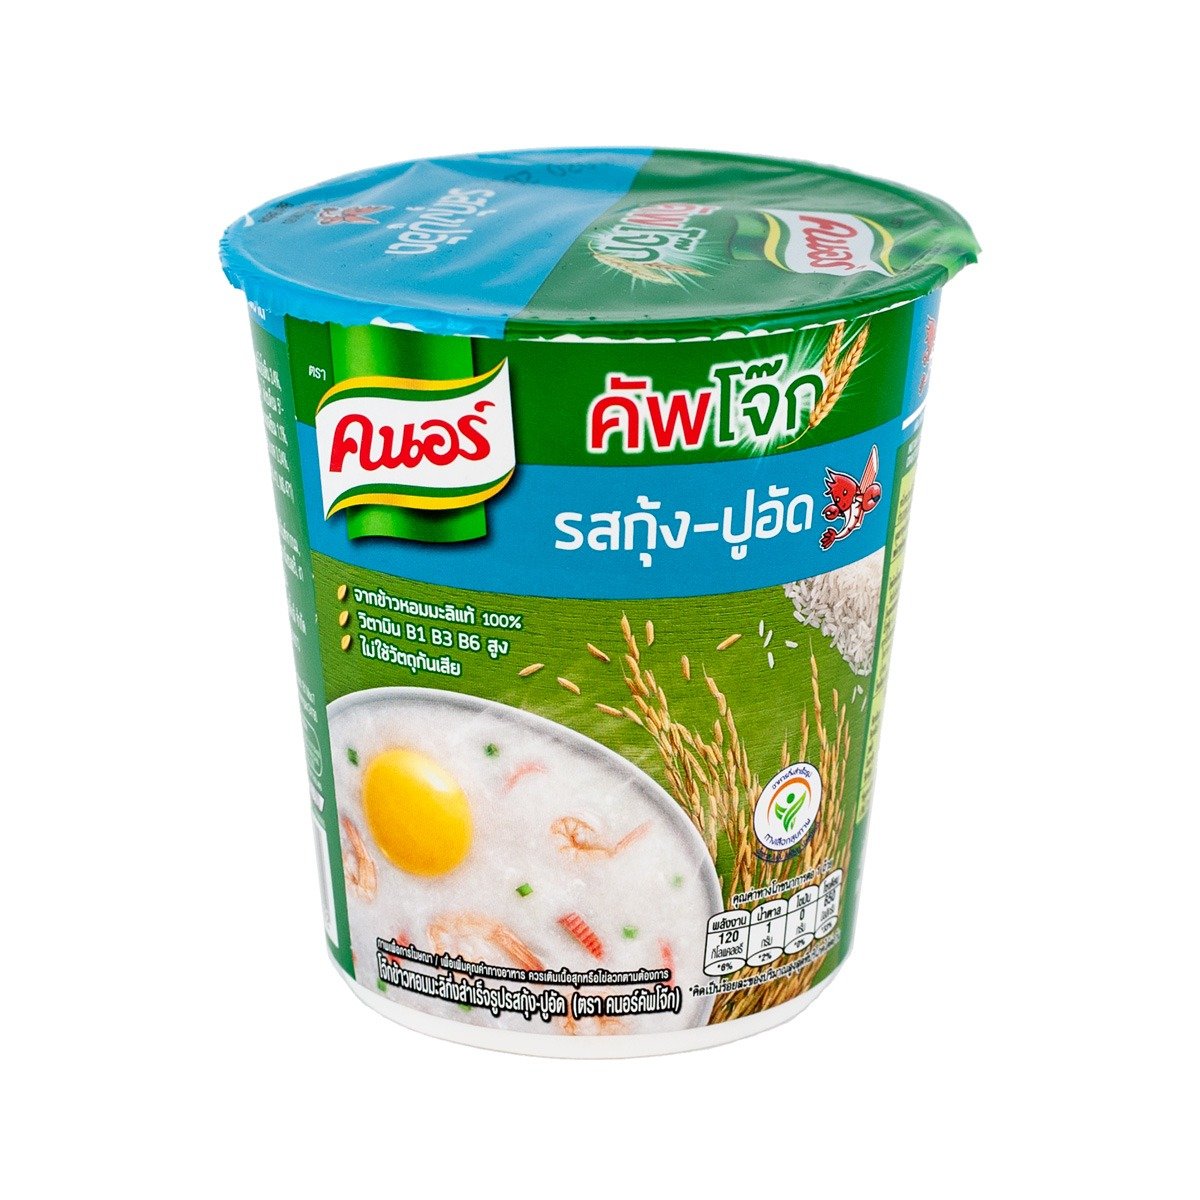 Knorr Chicken Porridge Cup 35g